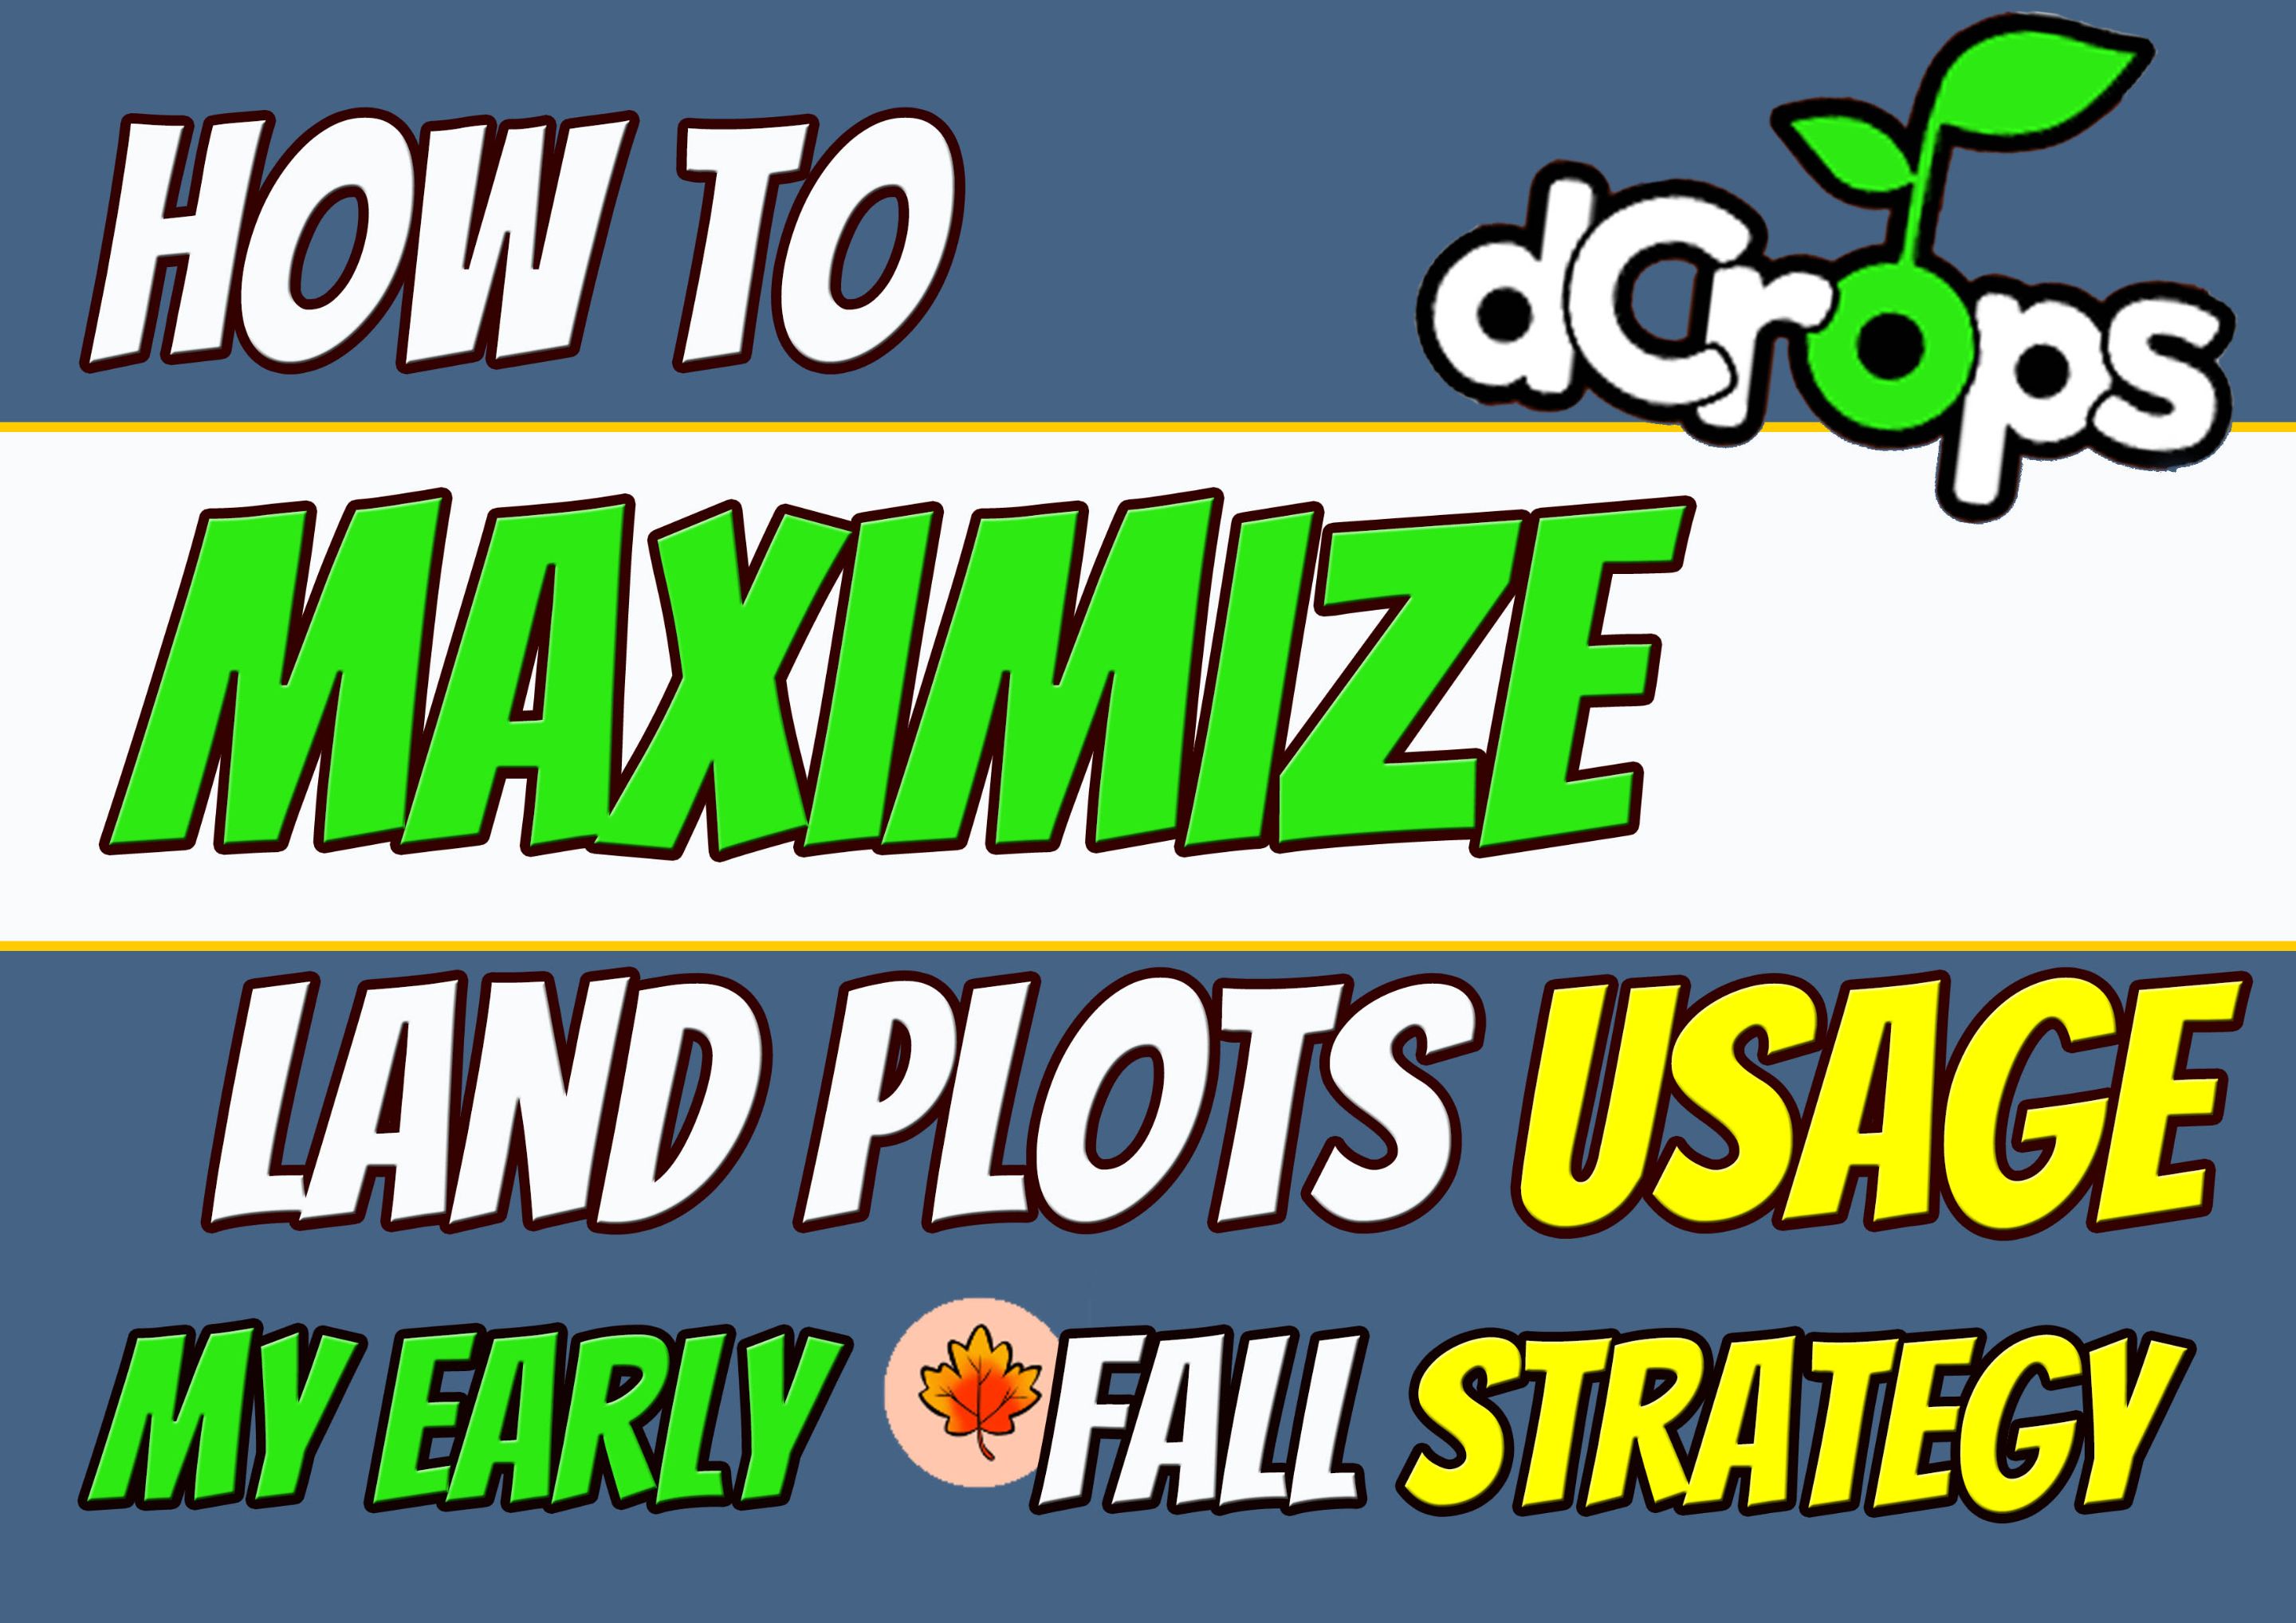 @libertycrypto27/how-to-maximize-the-land-plots-usage-my-early-fall-strategy-engita